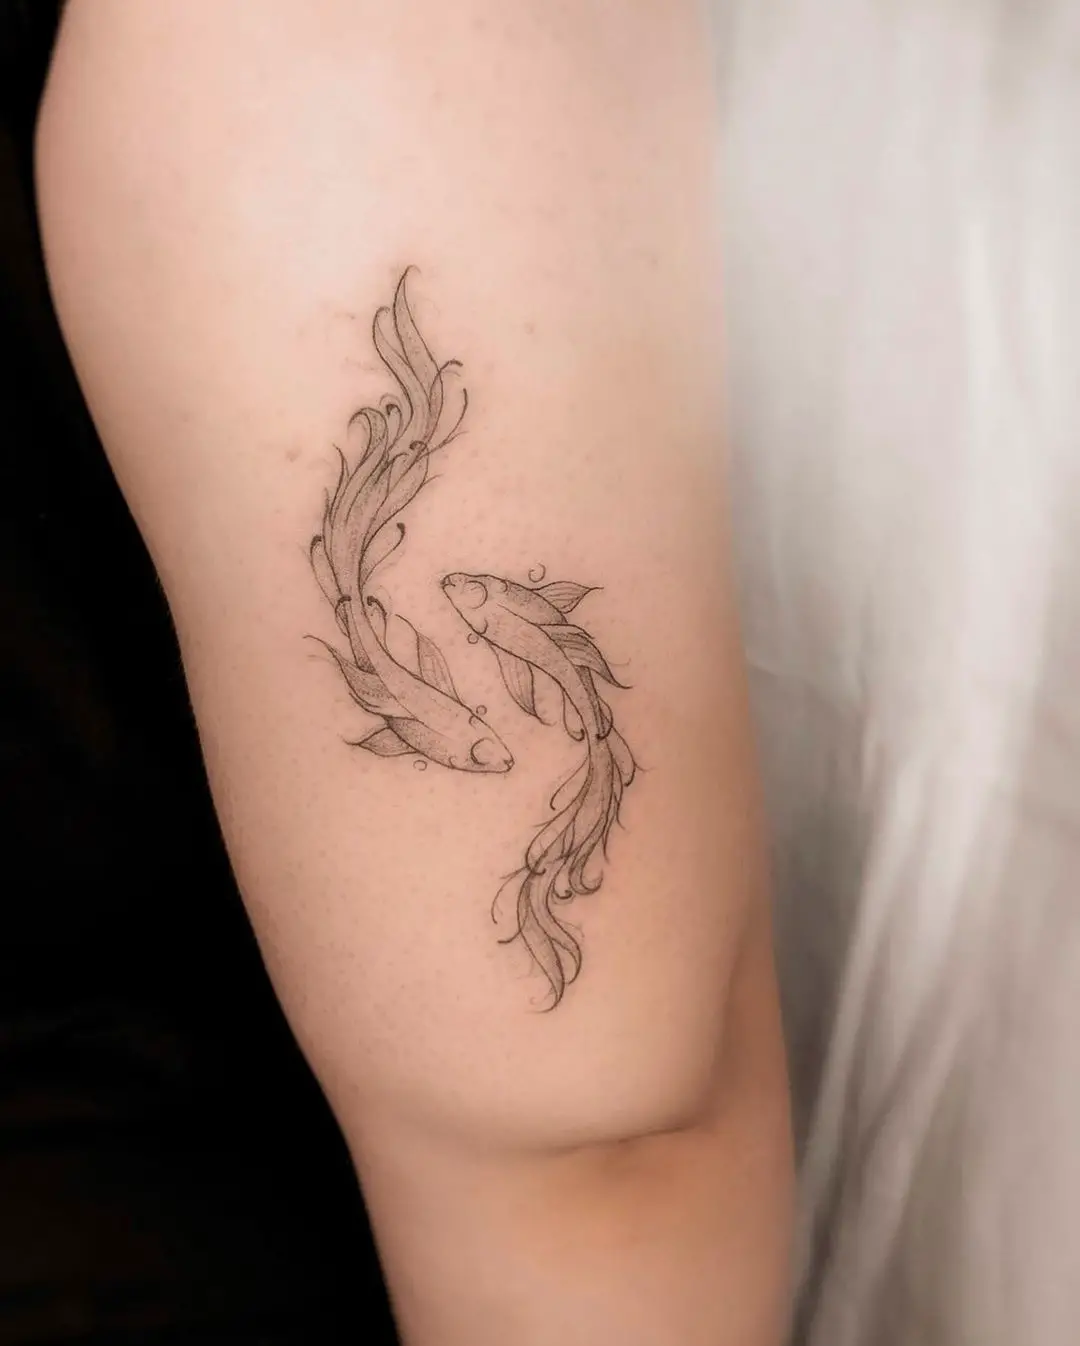 Two fish tattoo by 7needles.tattoo